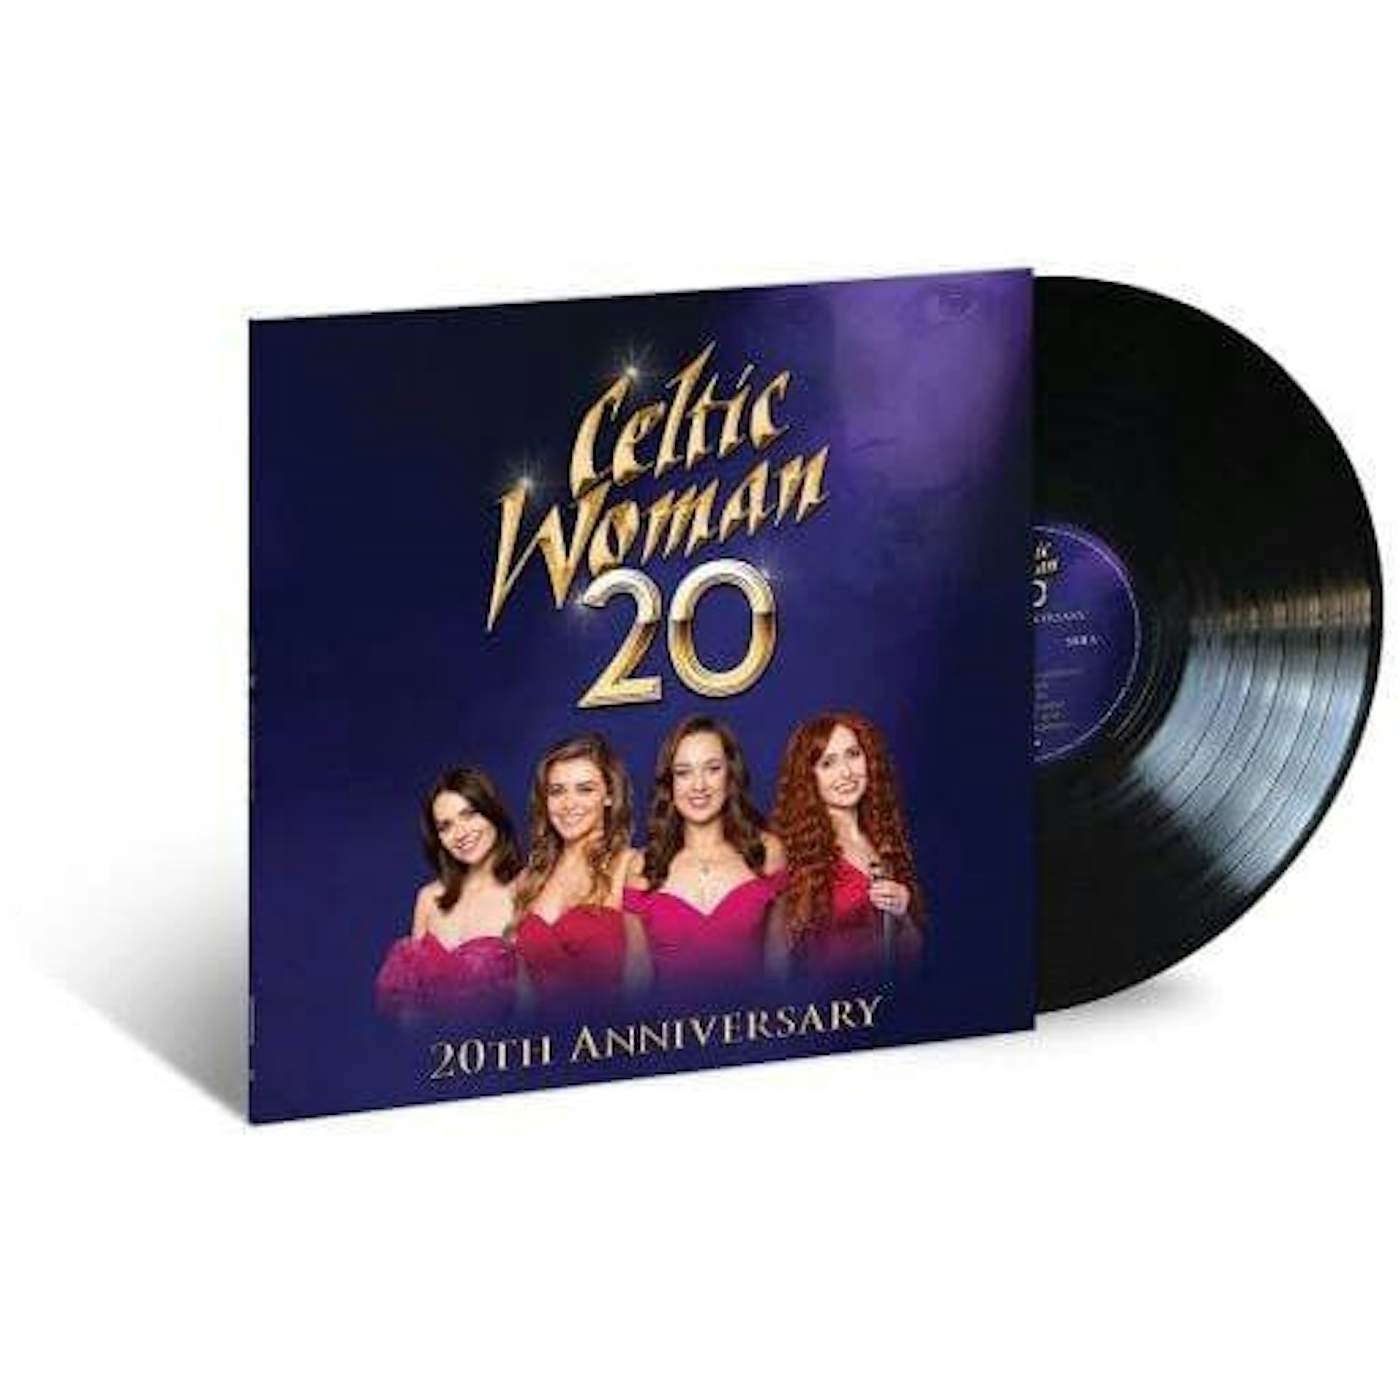 Celtic Woman 20 (20TH ANNIVERSARY) Vinyl Record